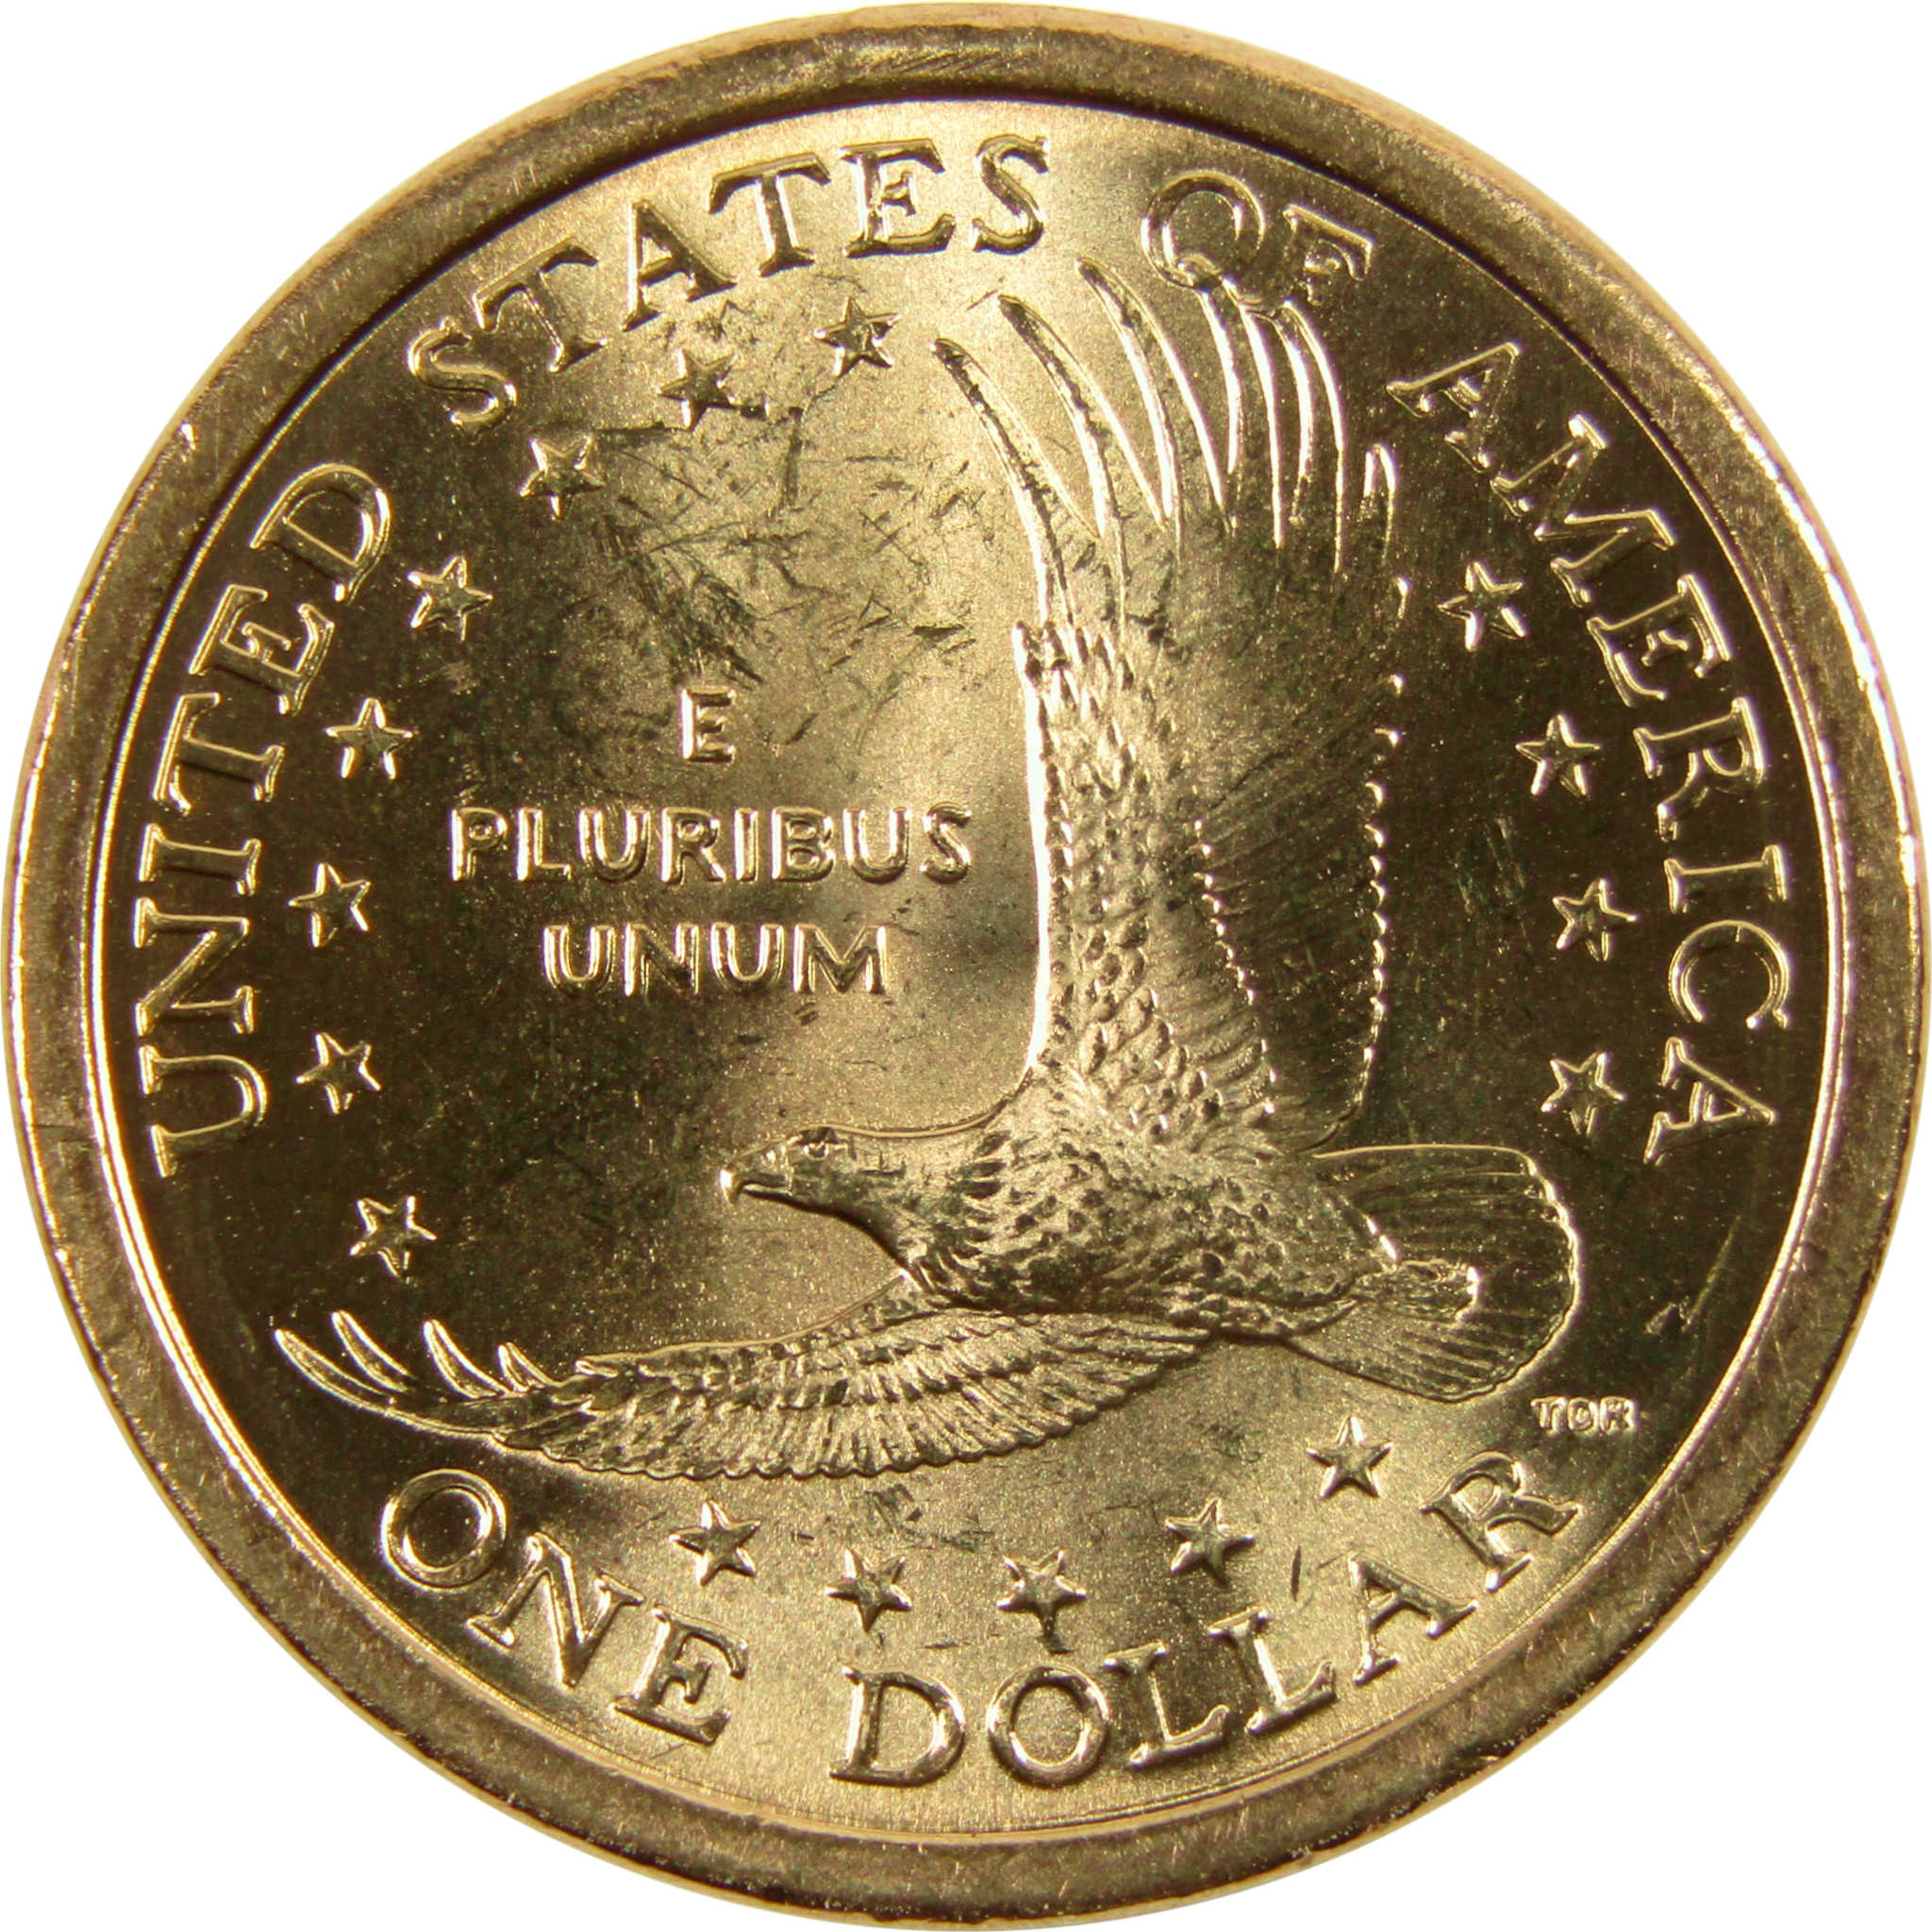 2004 P Sacagawea Native American Dollar BU Uncirculated $1 Coin